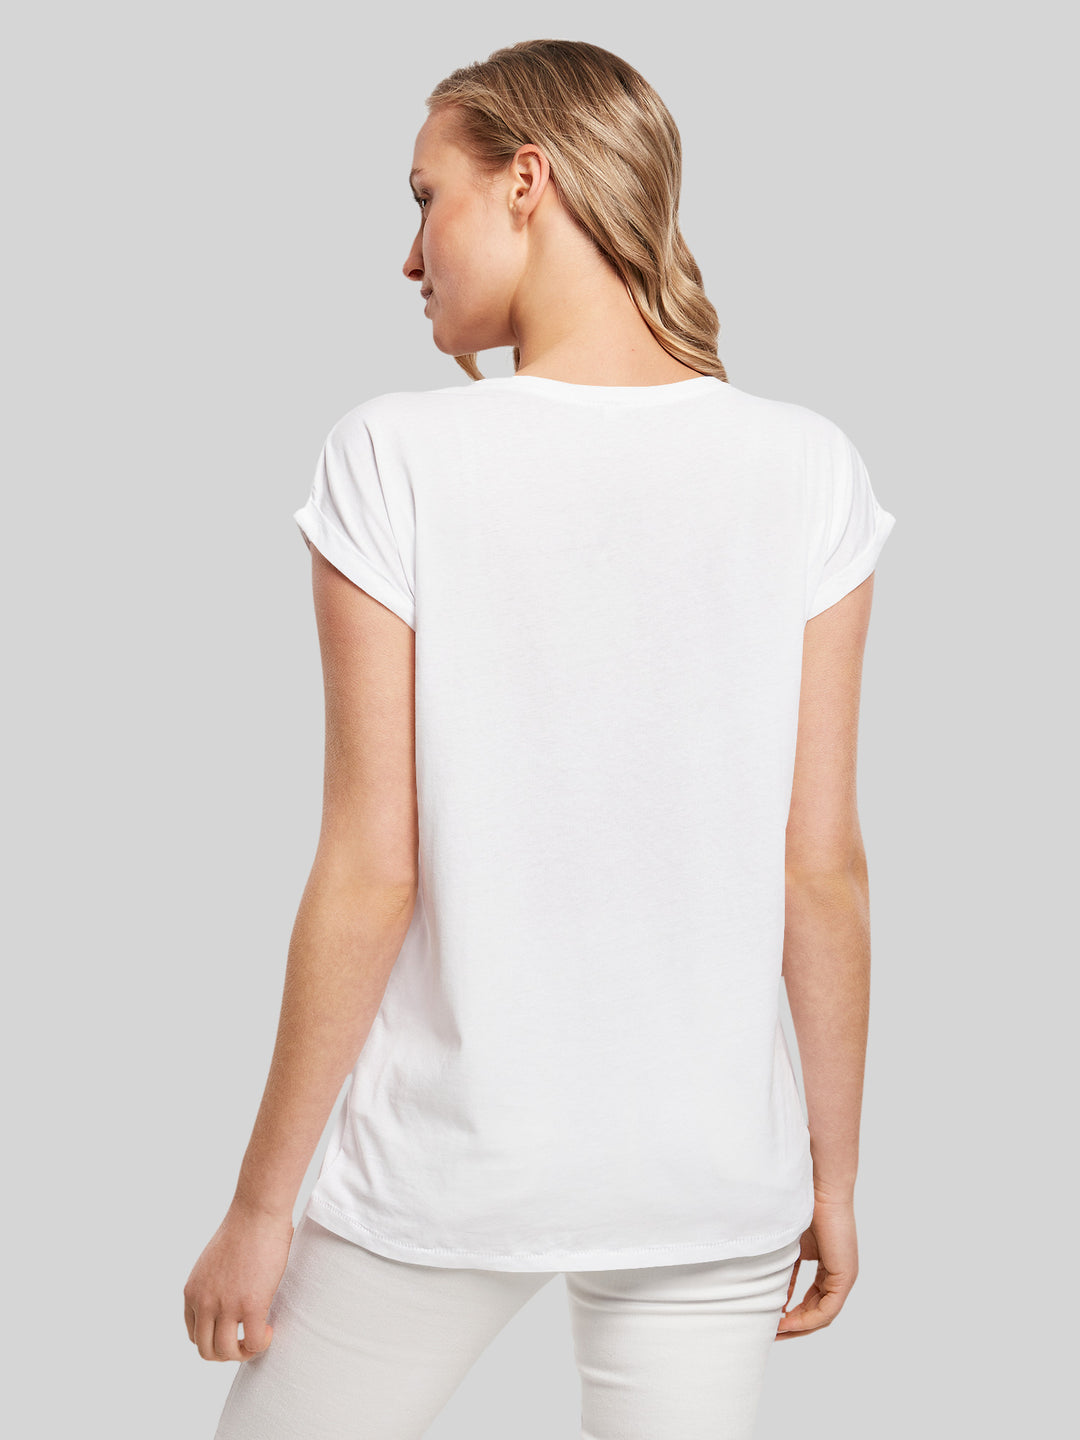 Queen T-Shirt | Classic Crest | Premium Short Sleeve Ladies Tee